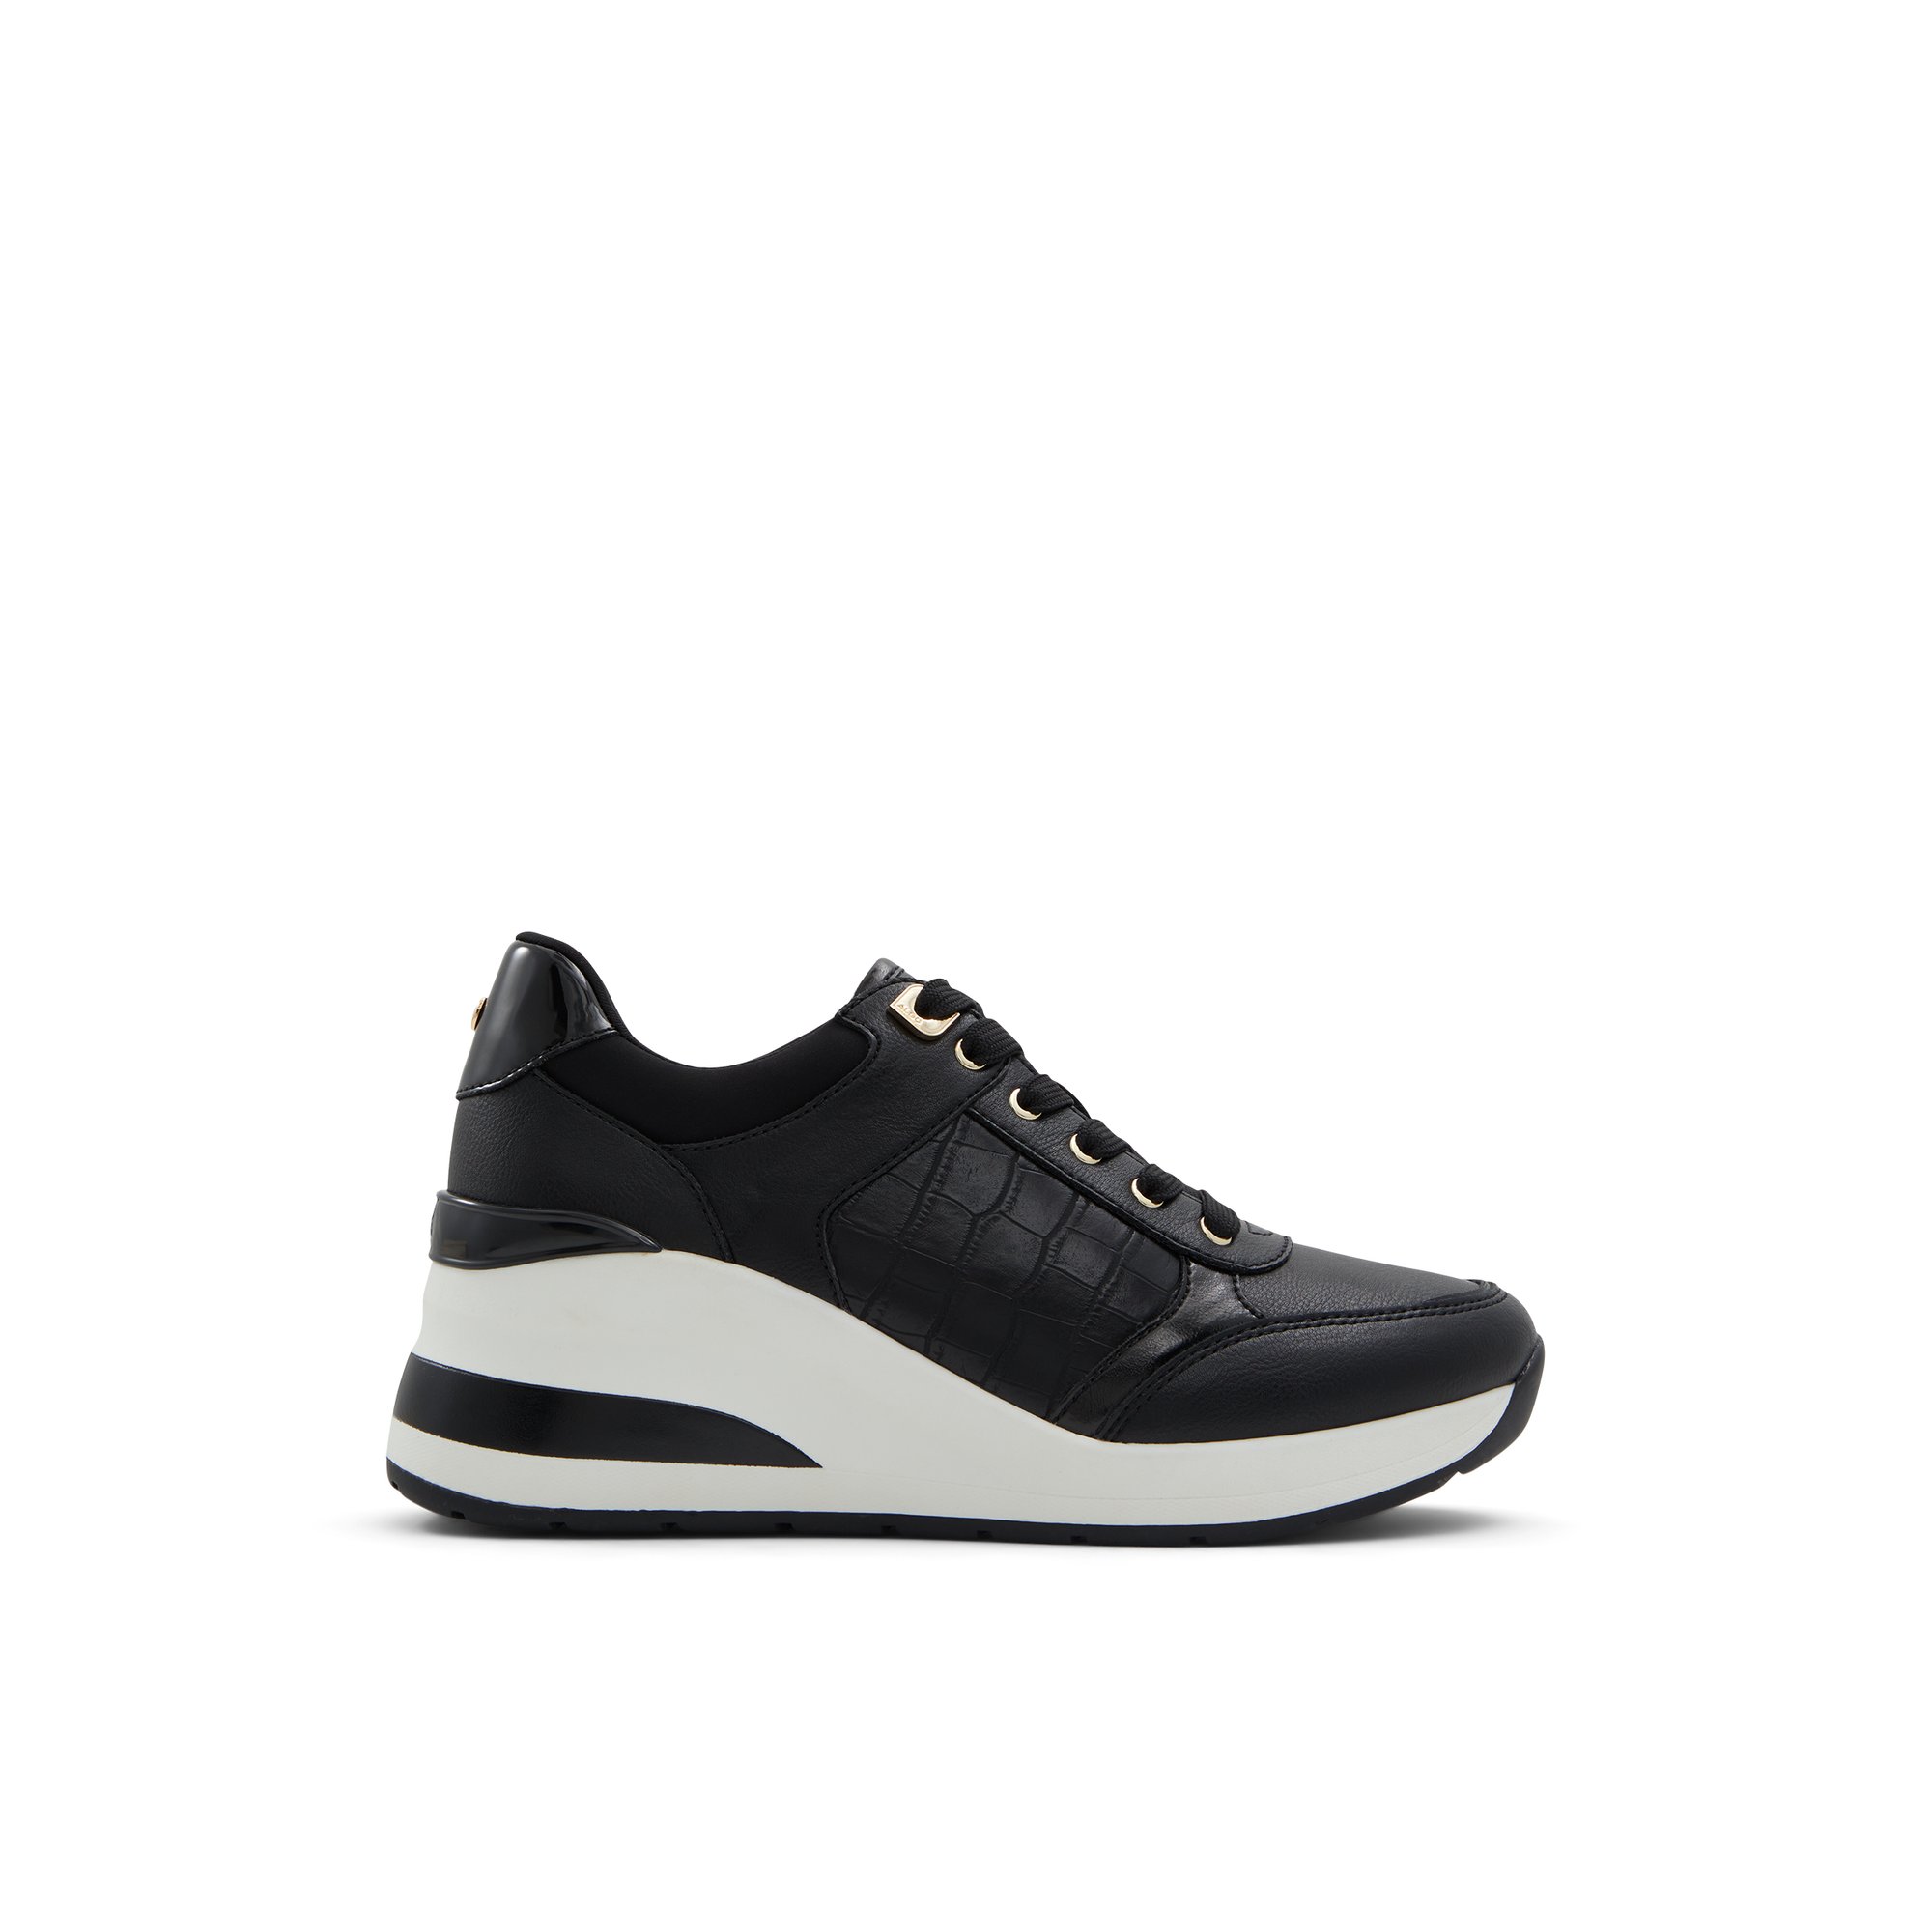 ALDO Iconistep - Women's Platform and Wedge Sneaker Sneakers - Black